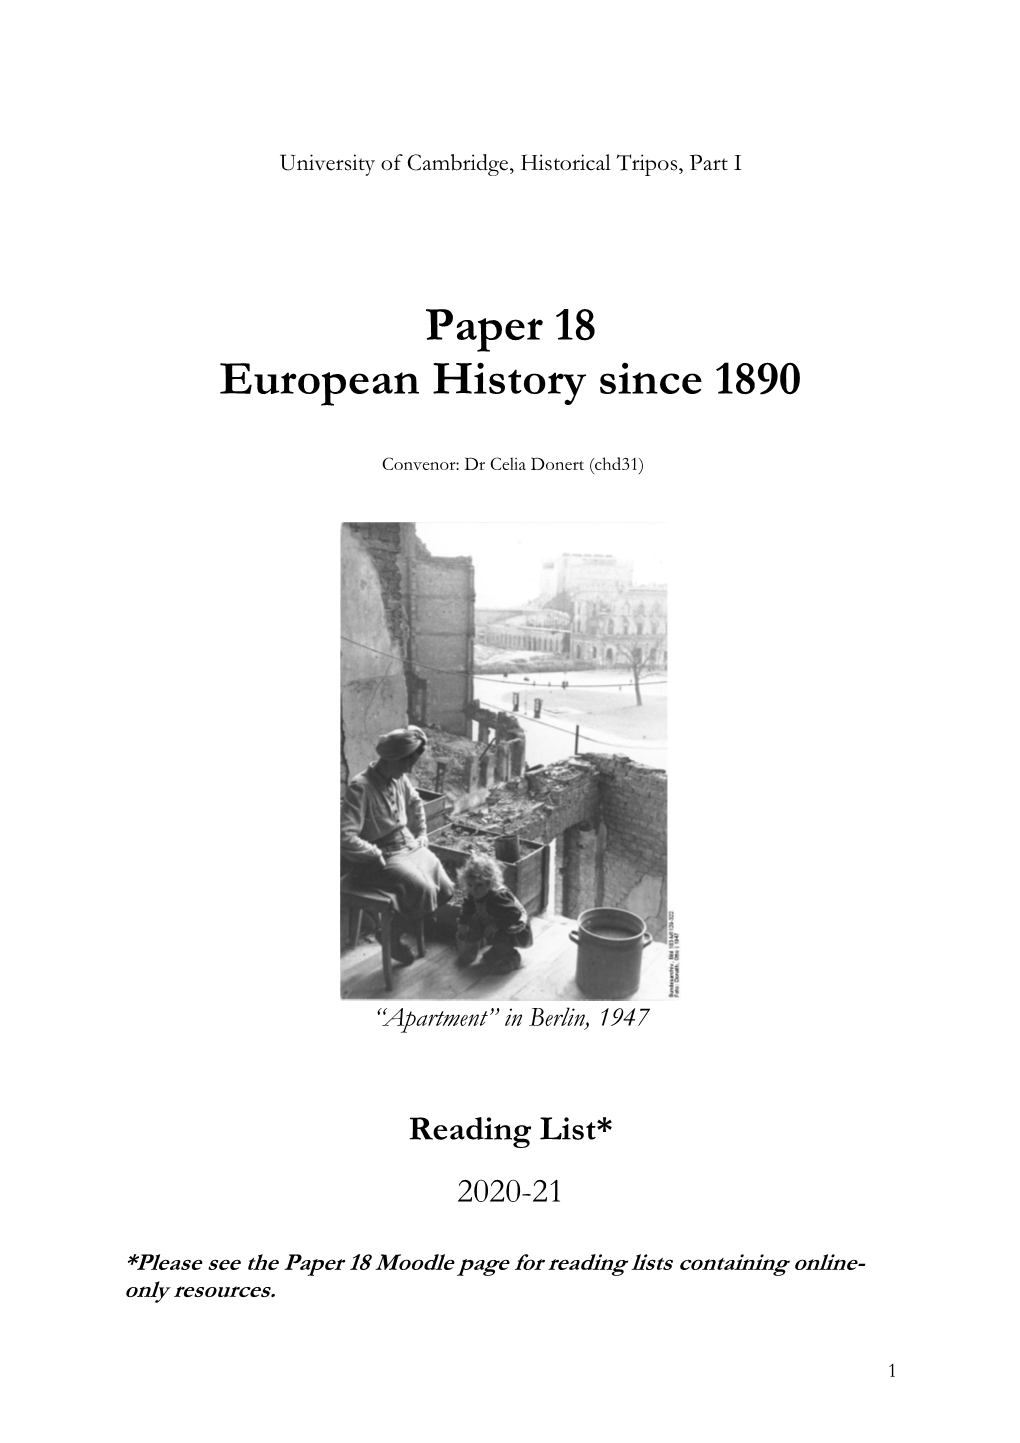 Paper 18 European History Since 1890